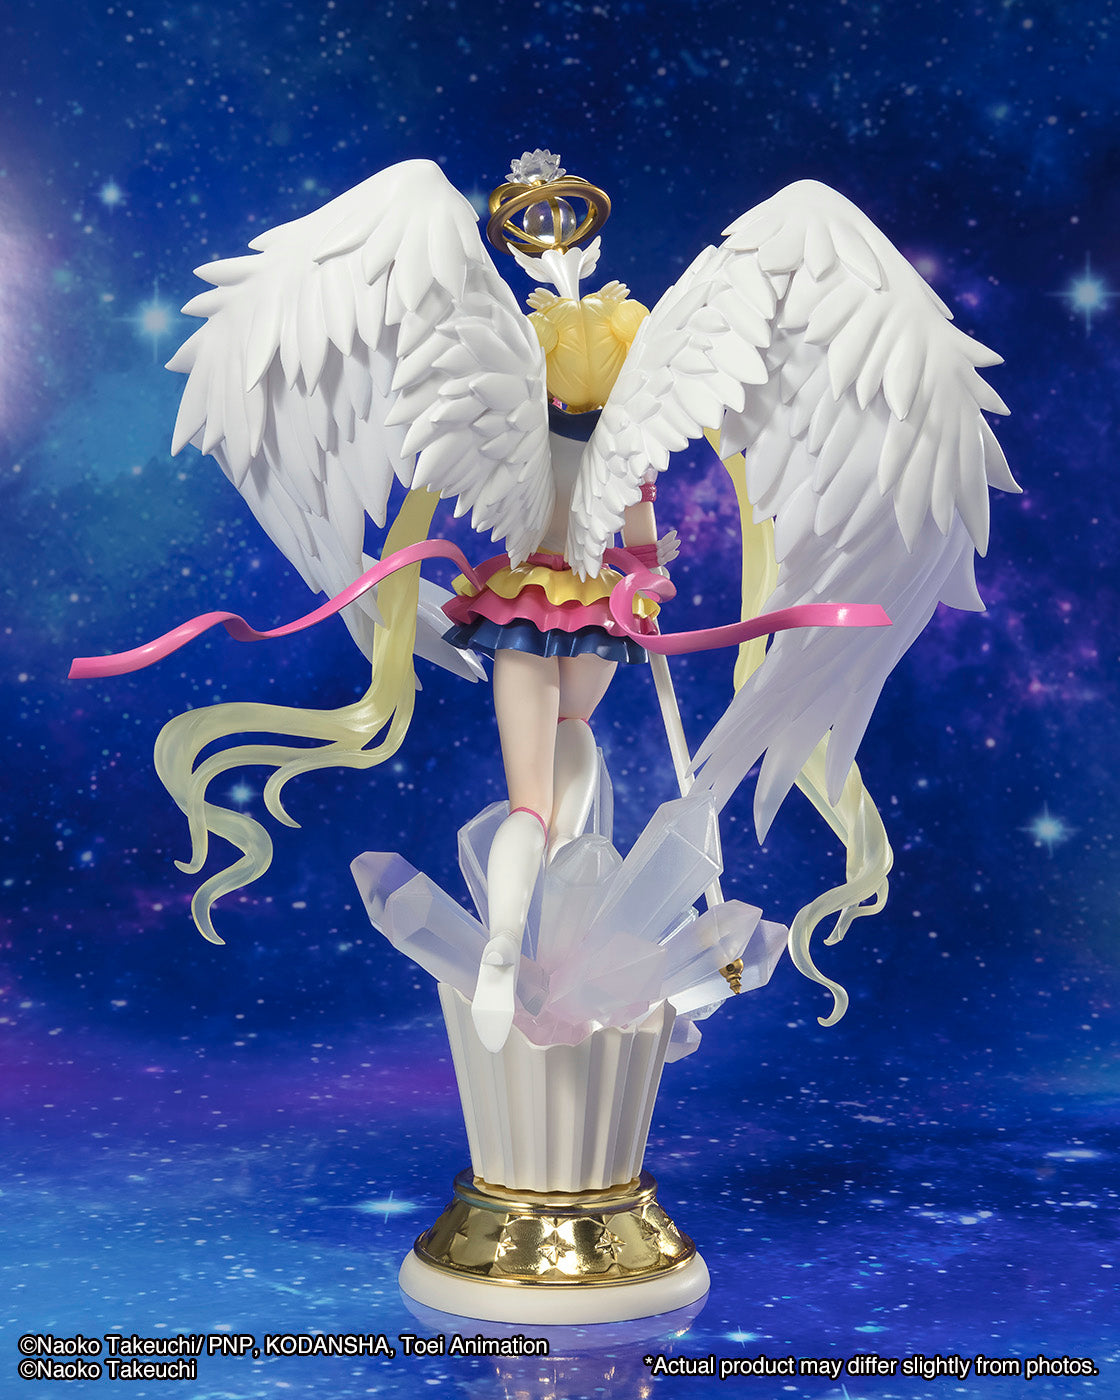 Figuarts ZERO Chouette Eternal Sailor Moon -Darkness calls to light, and light, summons darkness-